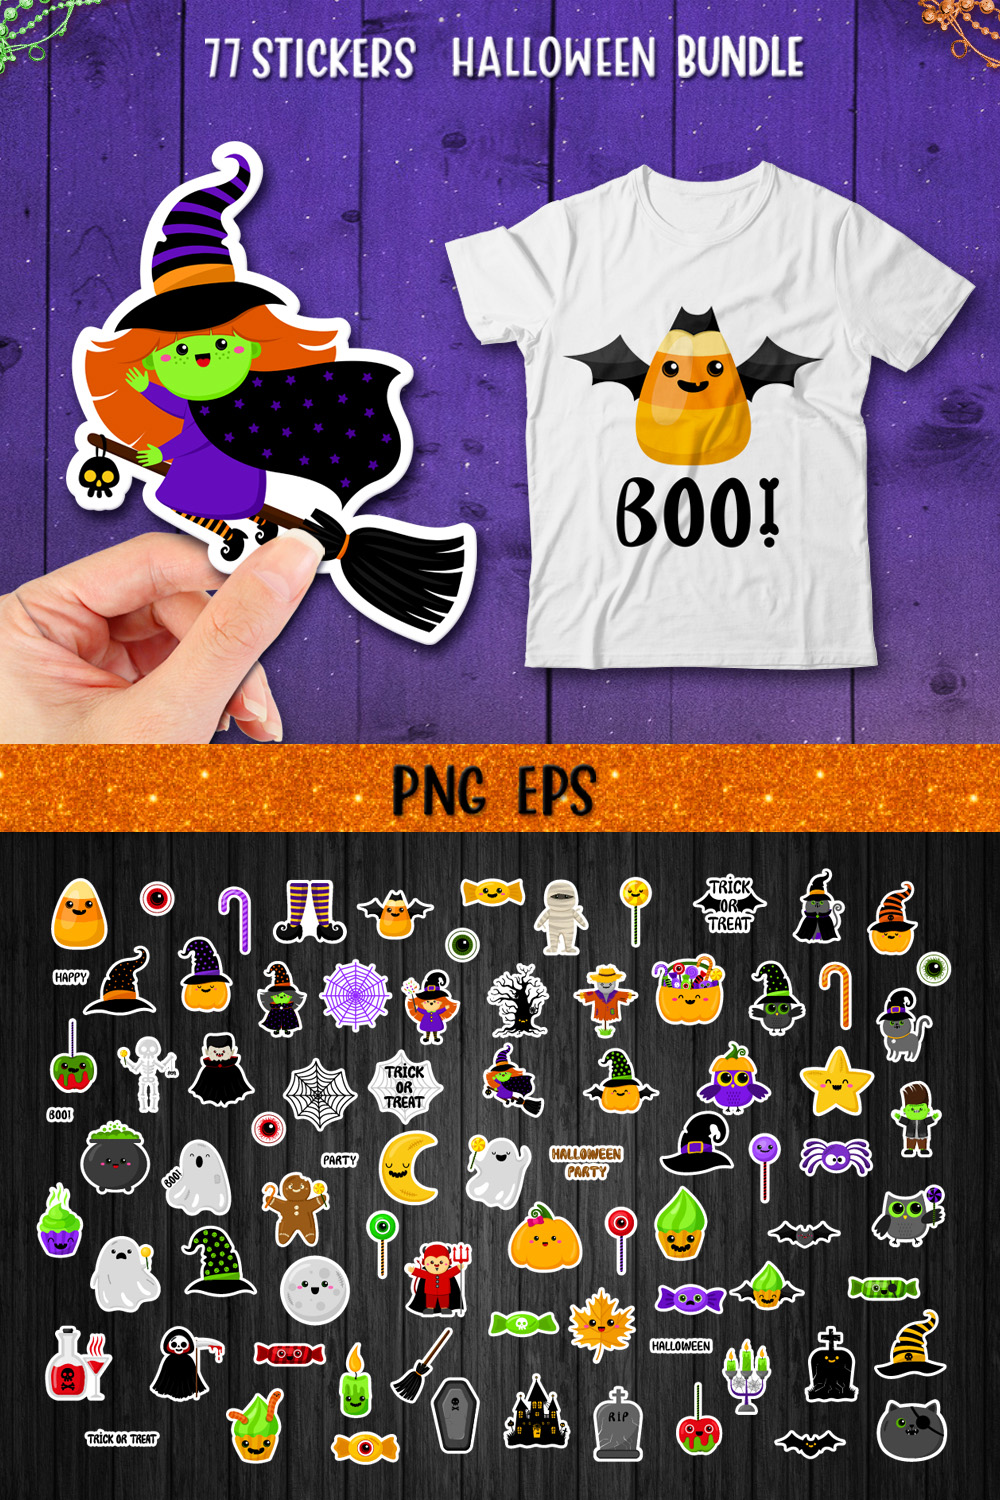 Halloween Stickers Bundle pinterest image.